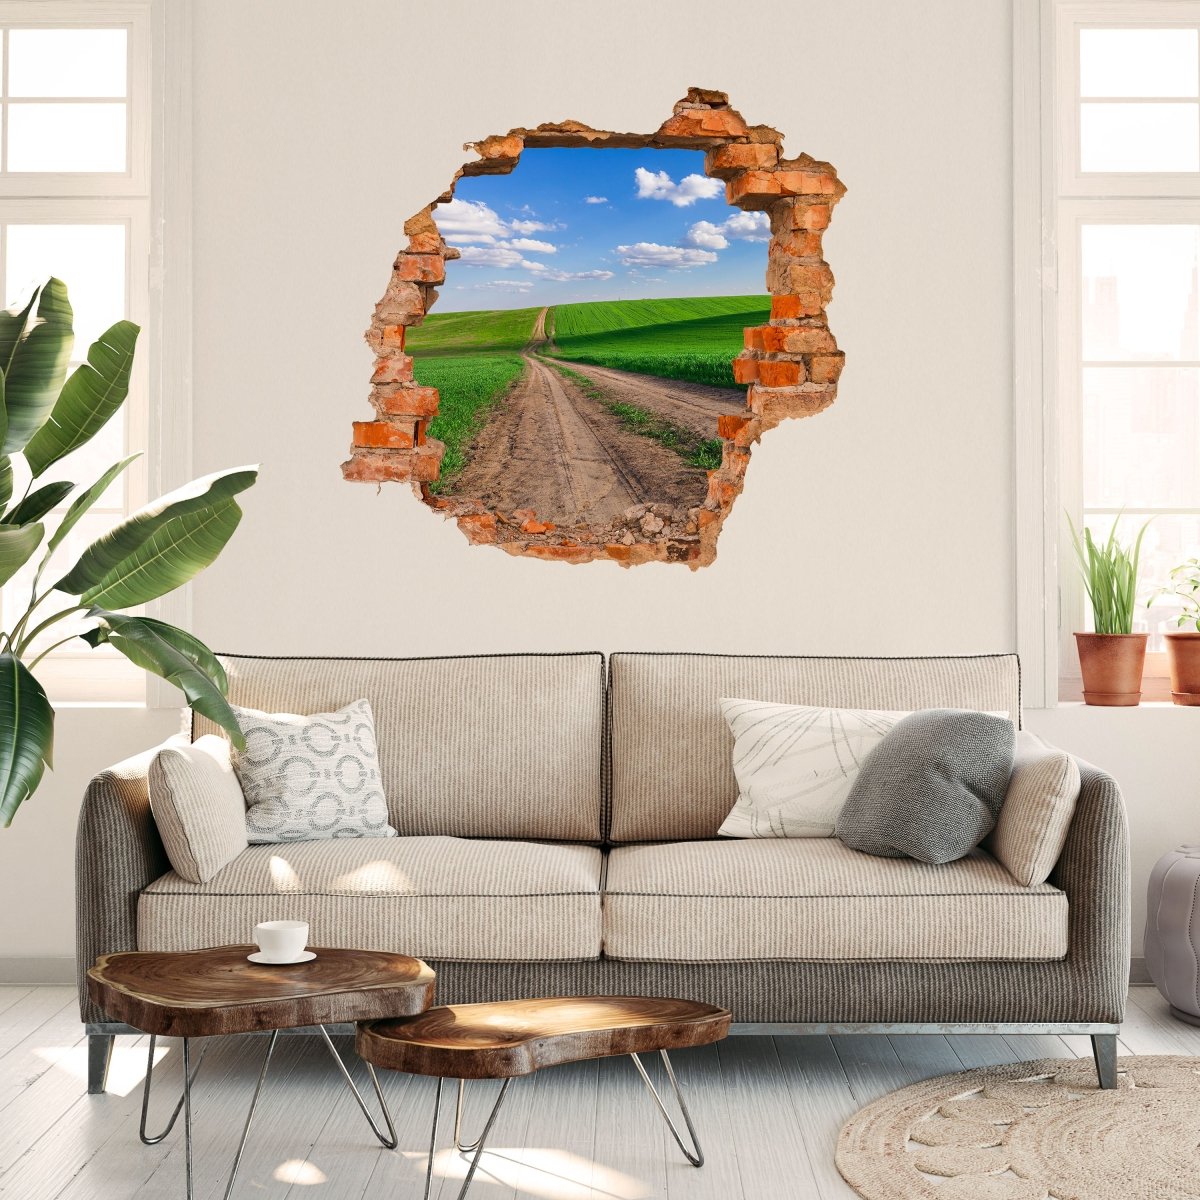 Sticker mural 3D chemin de terre au soleil, nuages, champ - Sticker mural M1229